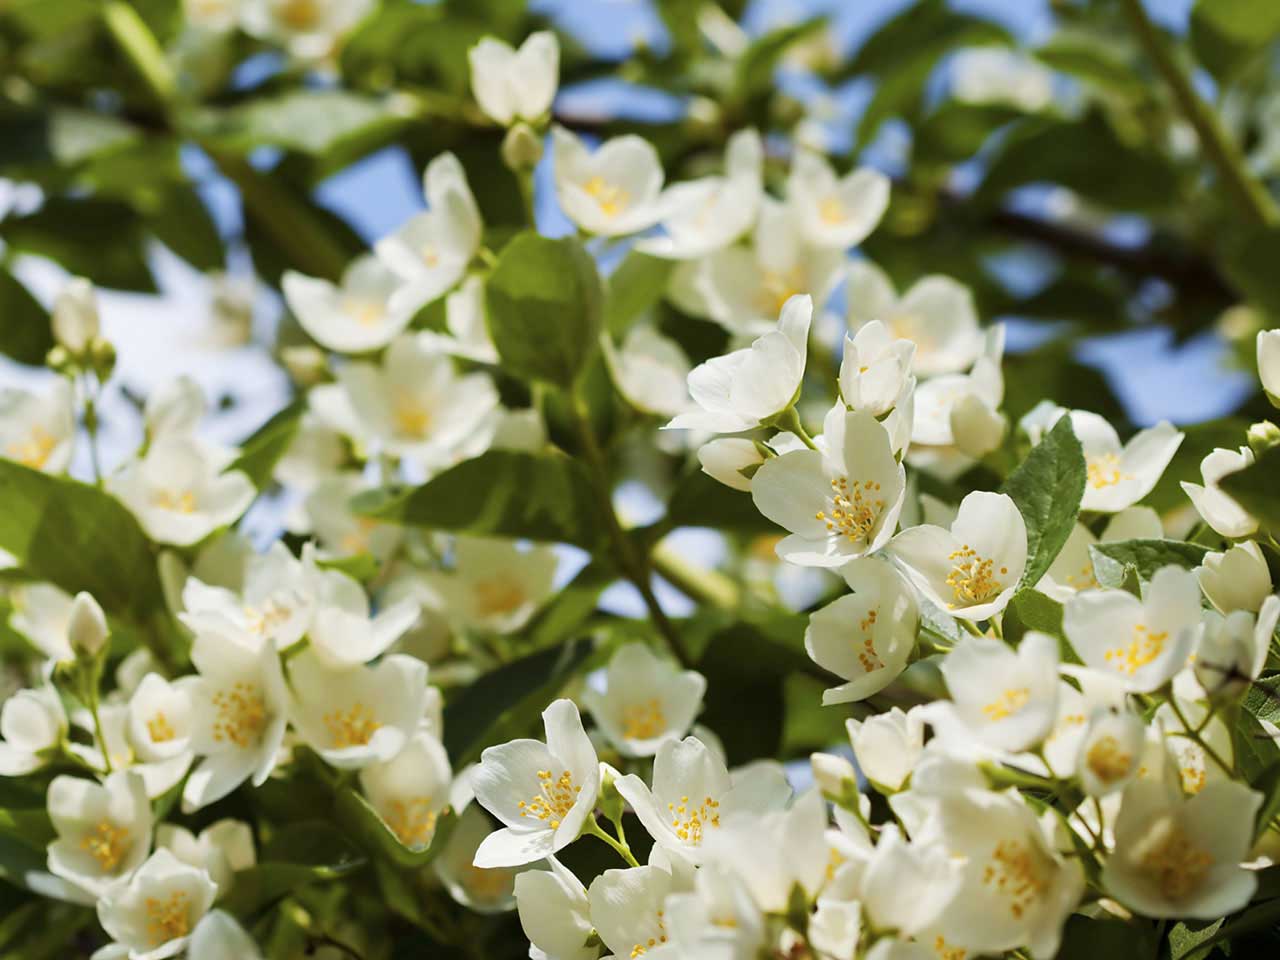 Fragrant white and yellow jasmine flowers